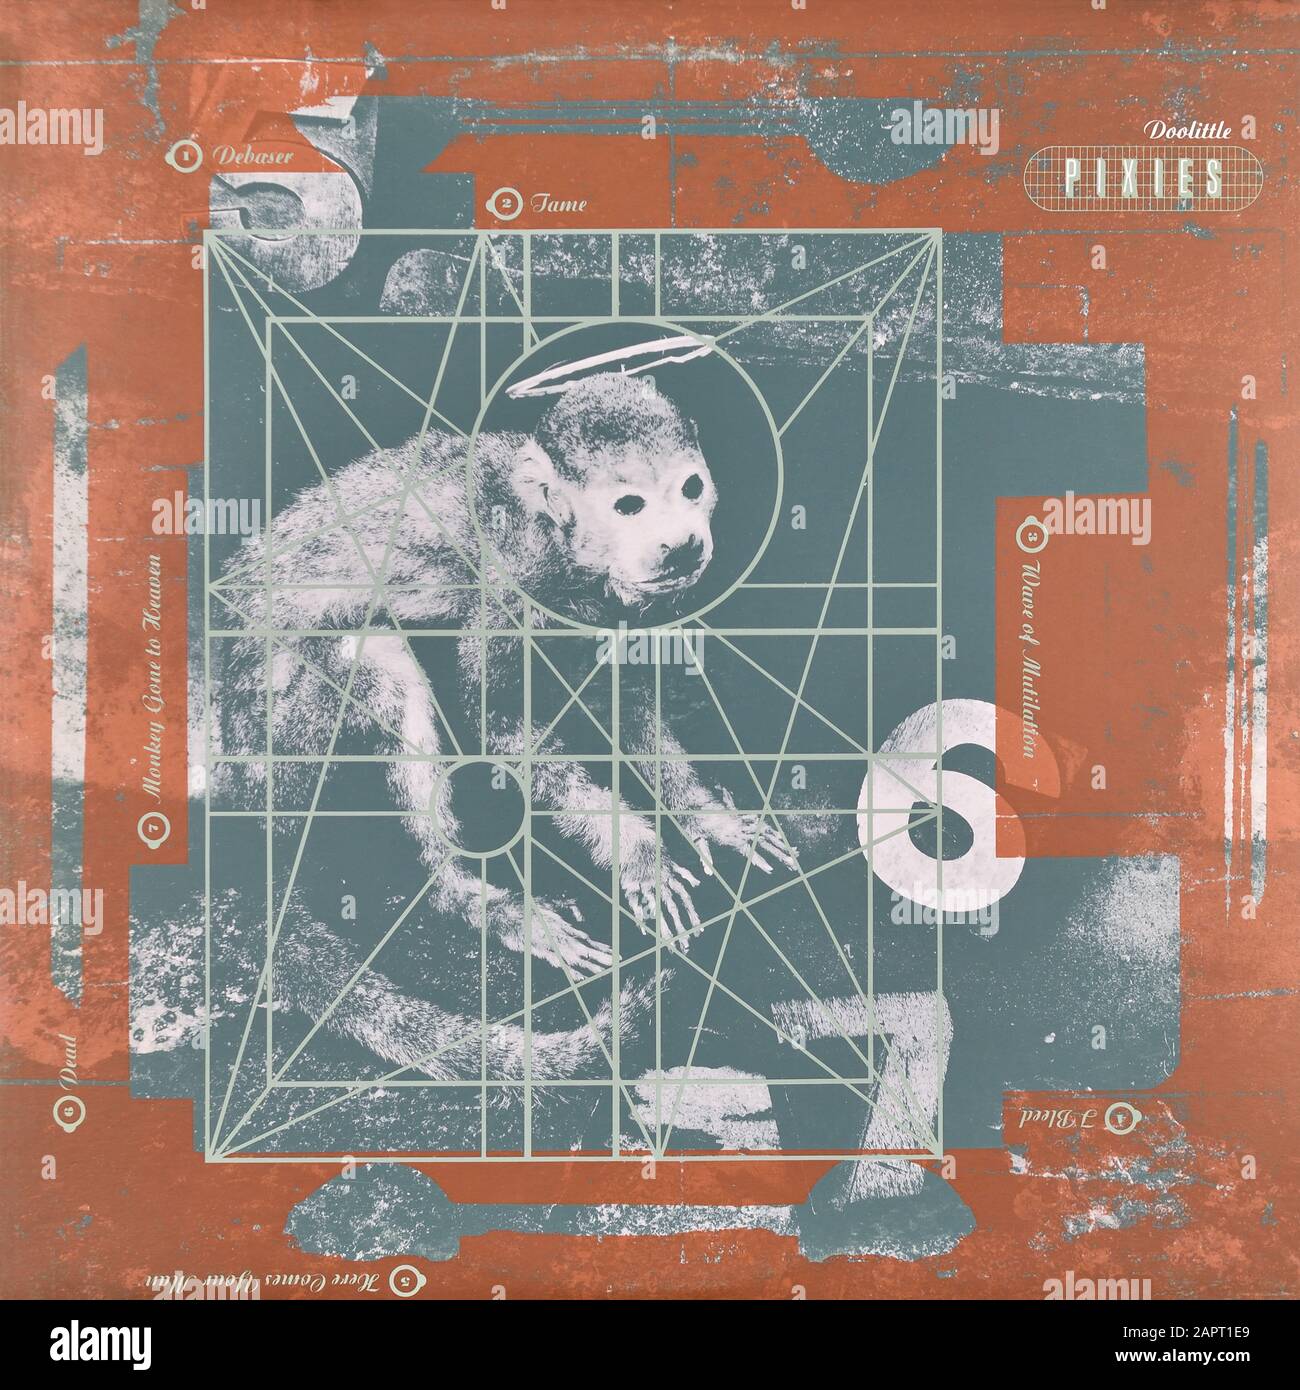 Pixies - original vinyl album cover - Monkey Gone To Heaven - 1989 Stock Photo